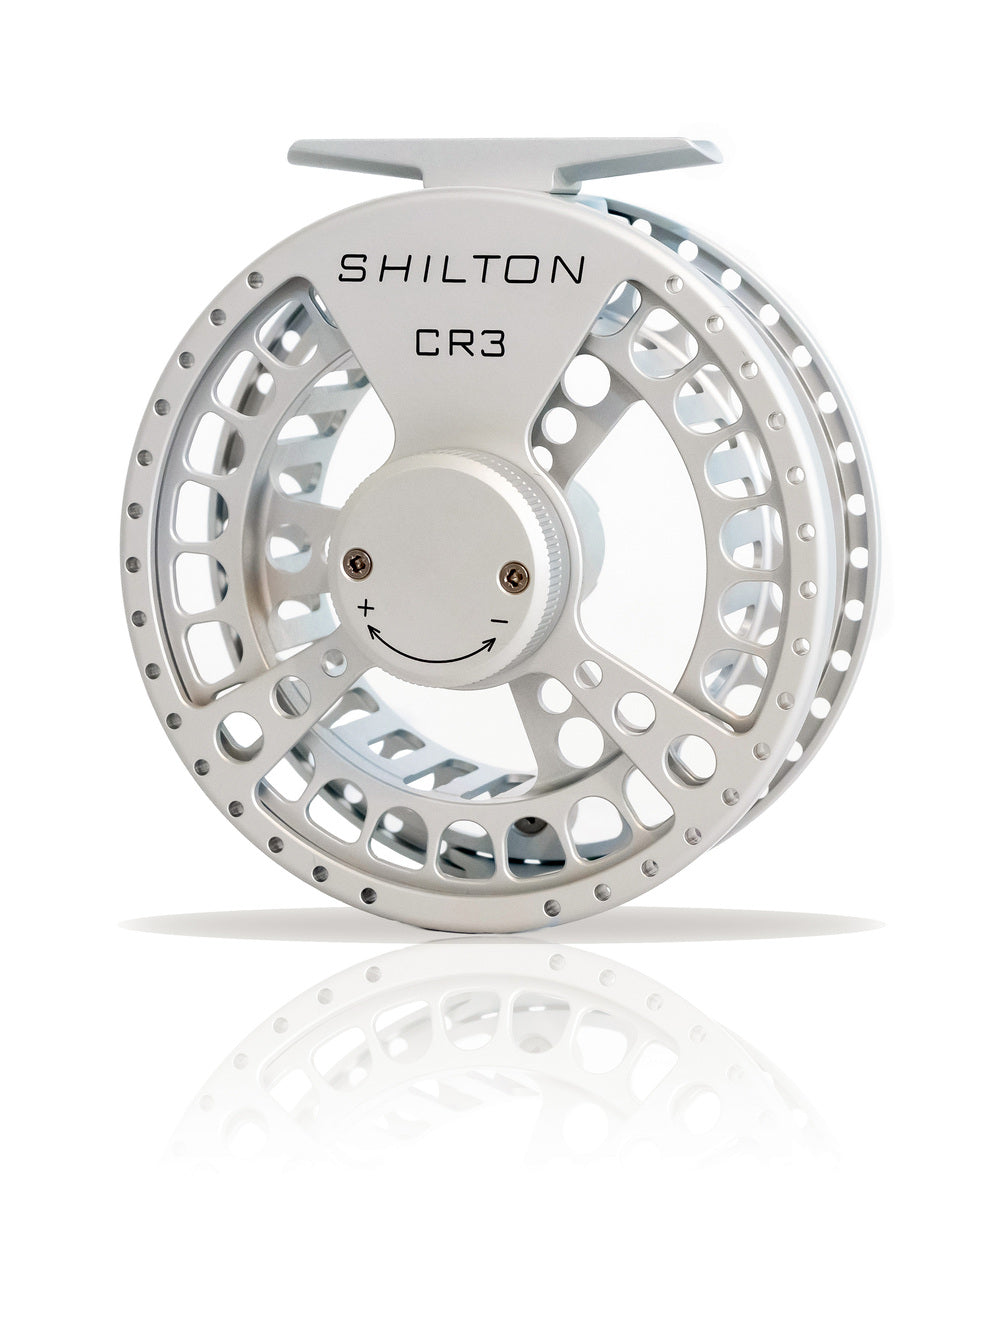 Shilton CR2 Reels (3-4wt) in Titanium Silver